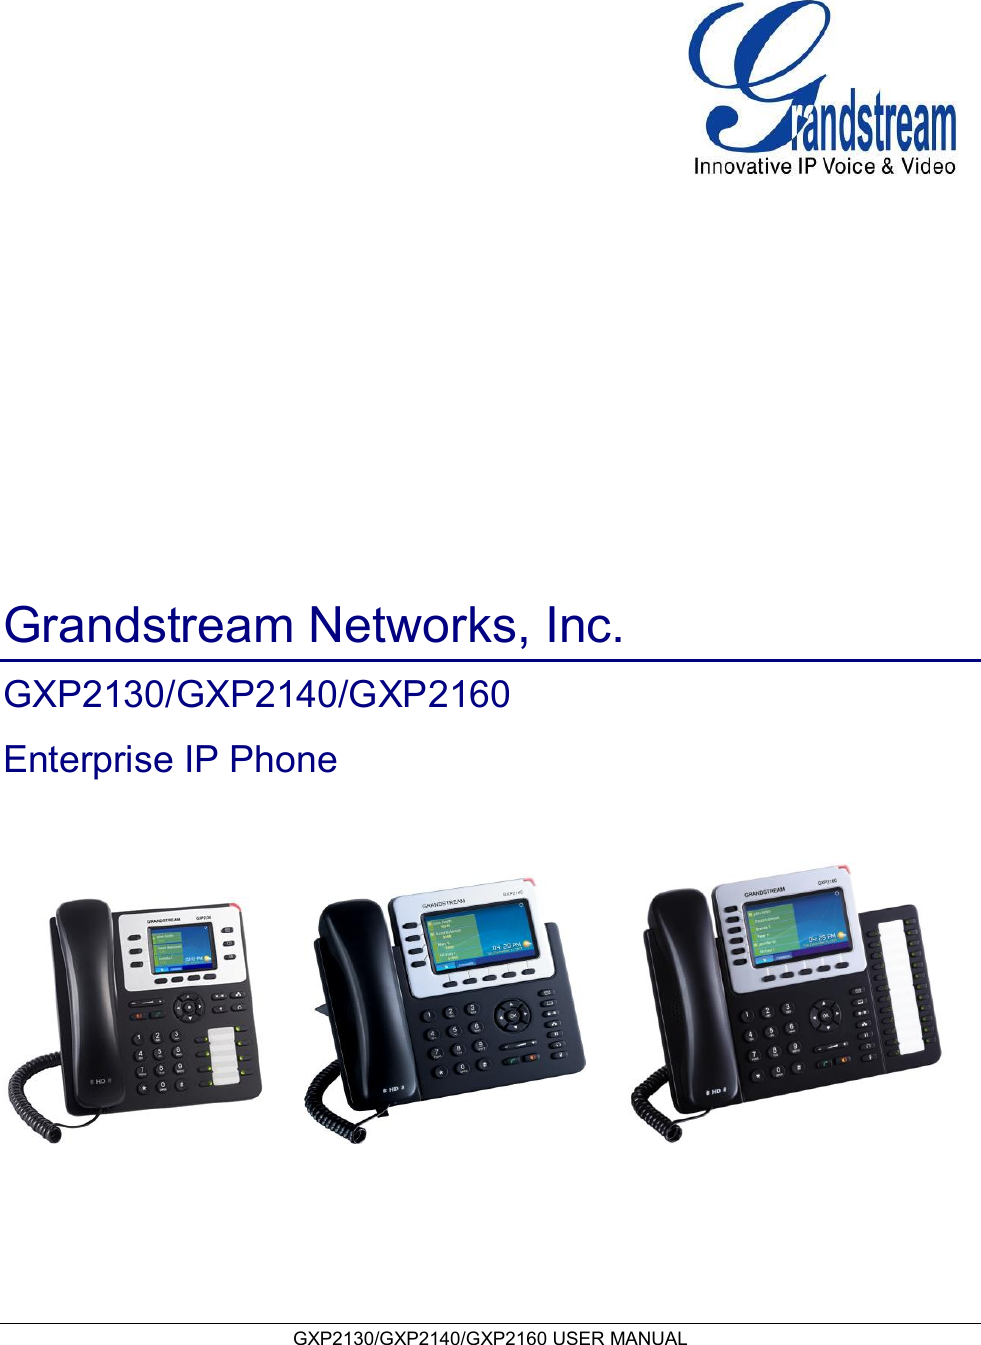  GXP2130/GXP2140/GXP2160 USER MANUAL                                                 Grandstream Networks, Inc. GXP2130/GXP2140/GXP2160 Enterprise IP Phone                  